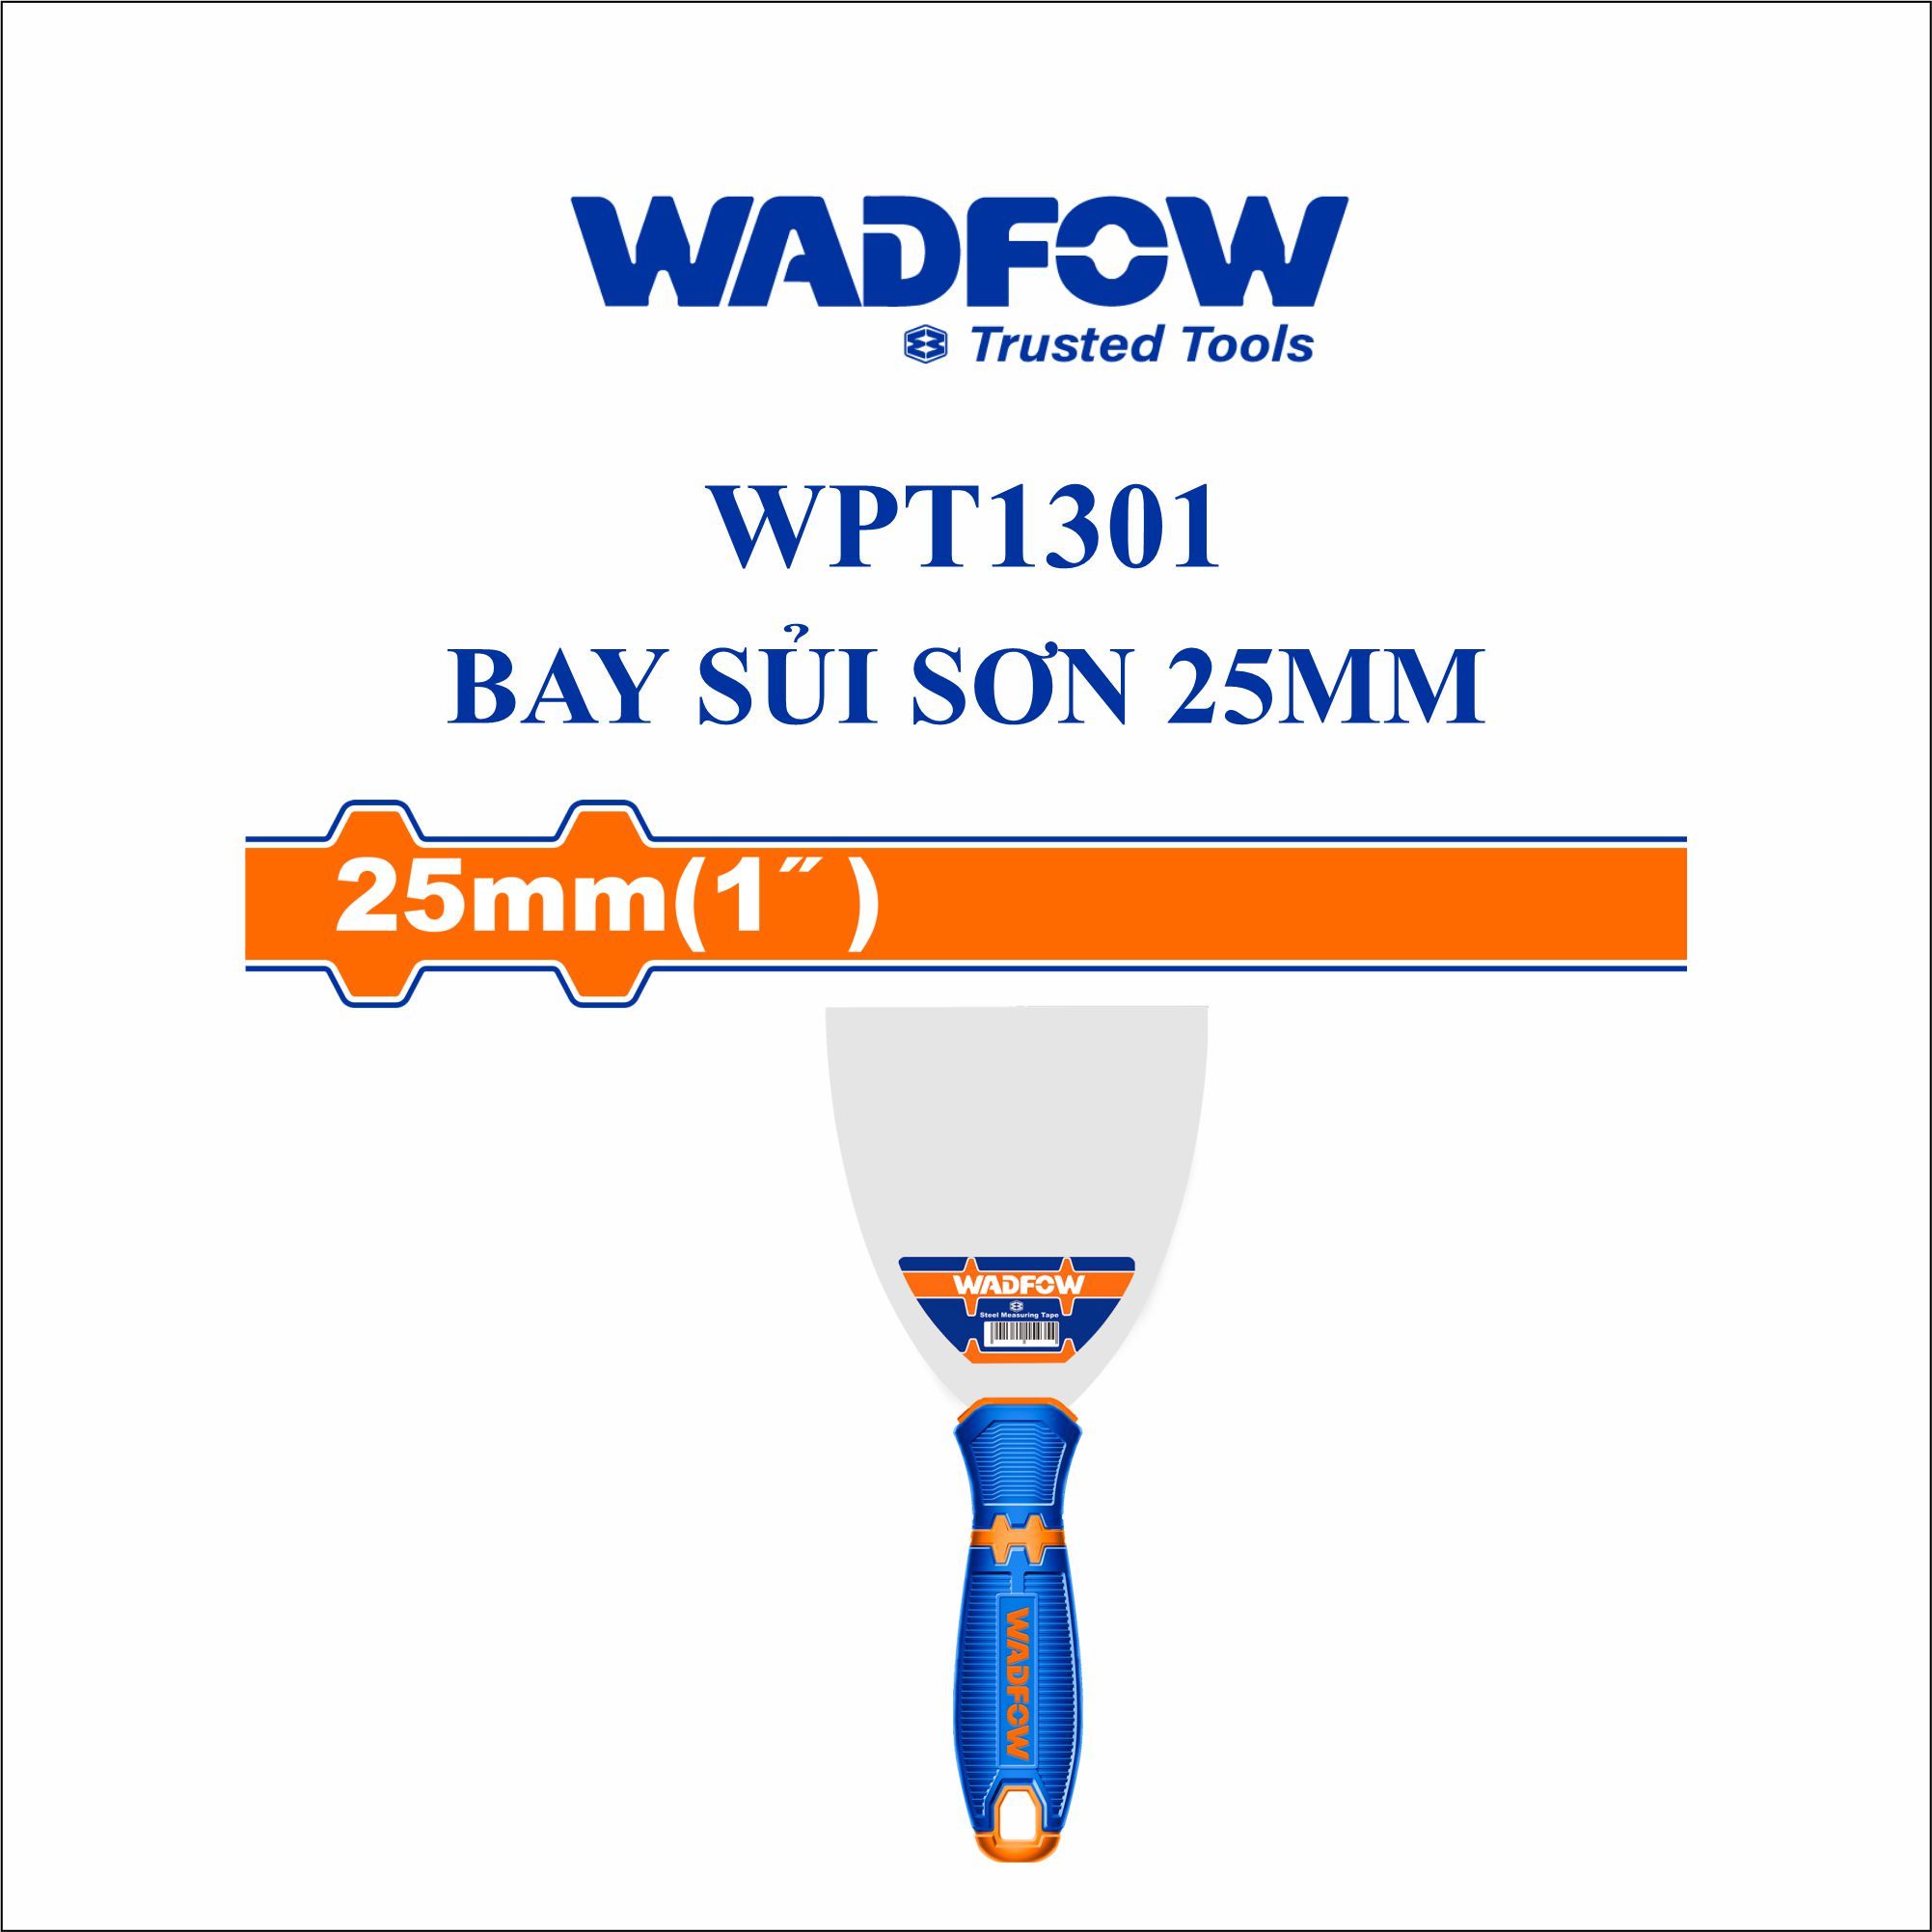  Bay sủi sơn 25mm WADFOW WPT1301 